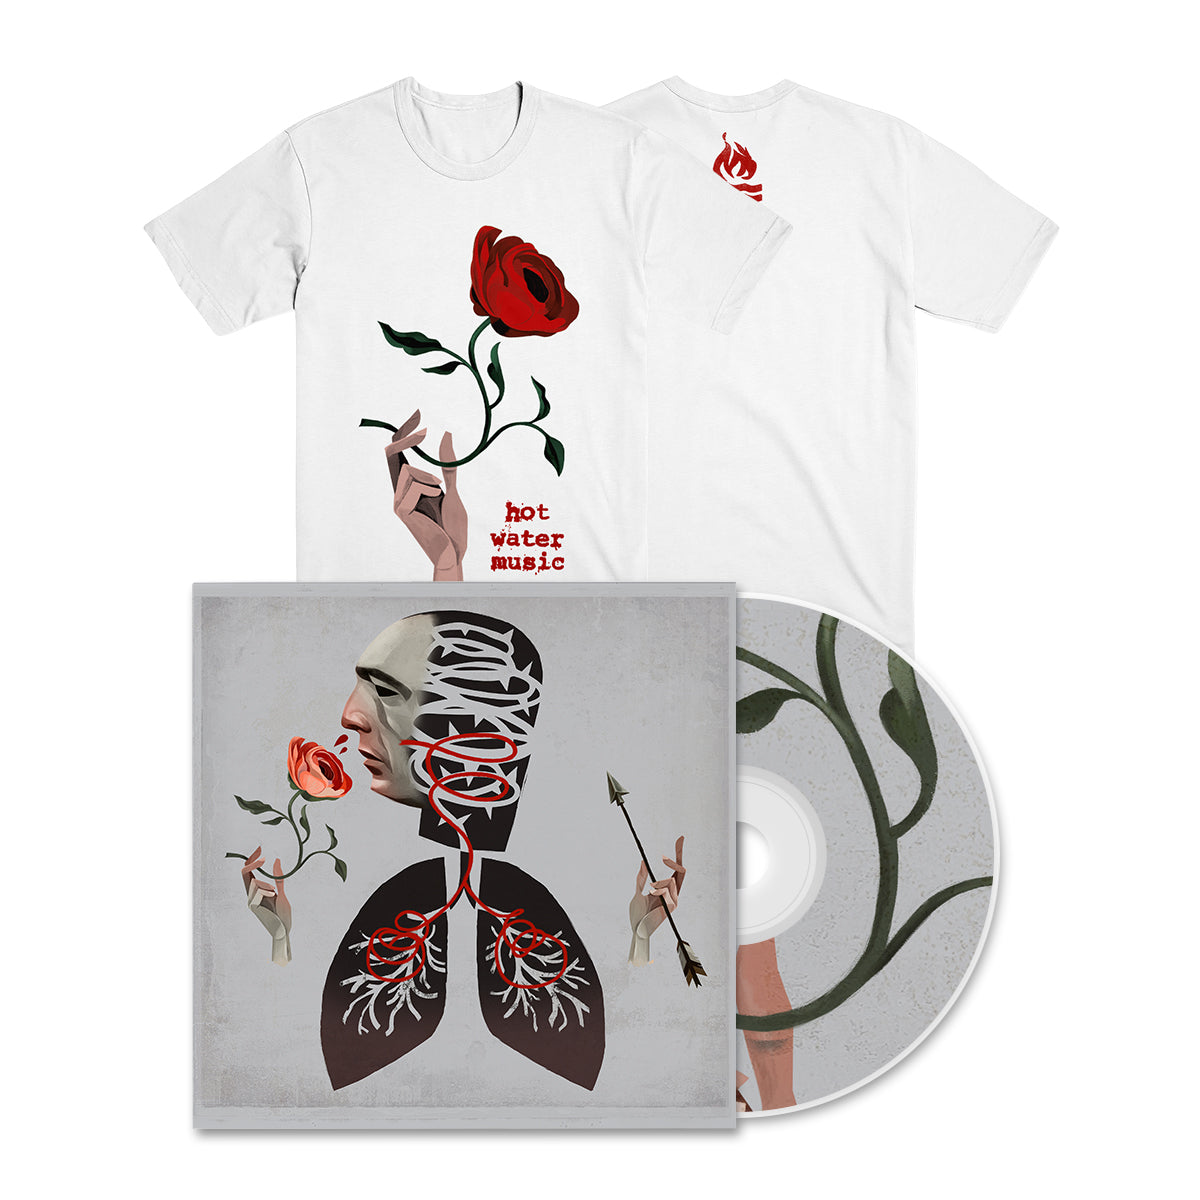 HOT WATER MUSIC "Vows - White" CD + T-Shirt Bundle